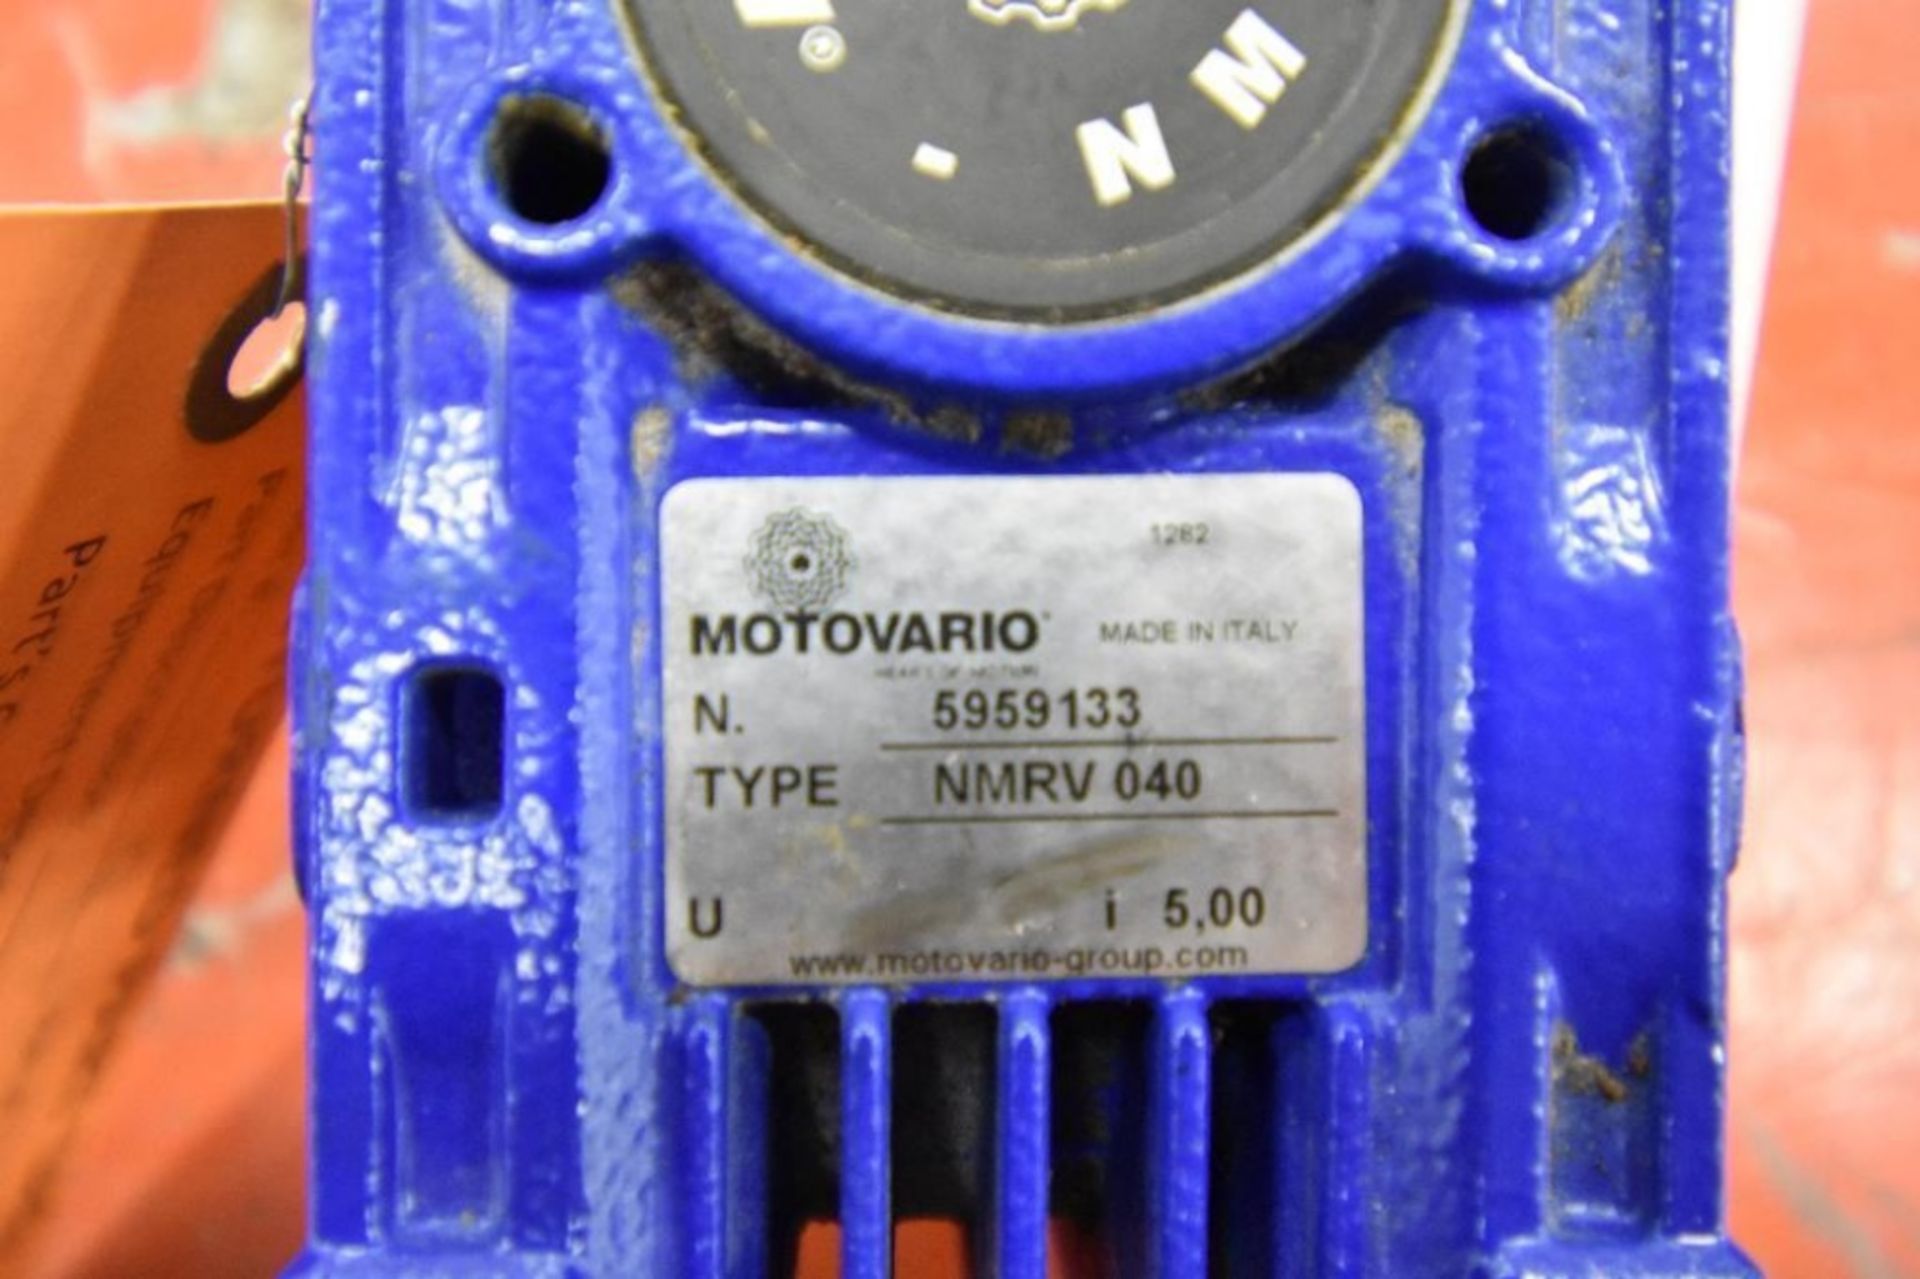 MOTOR: Moto Vario 5959133 NMRV - Image 4 of 5